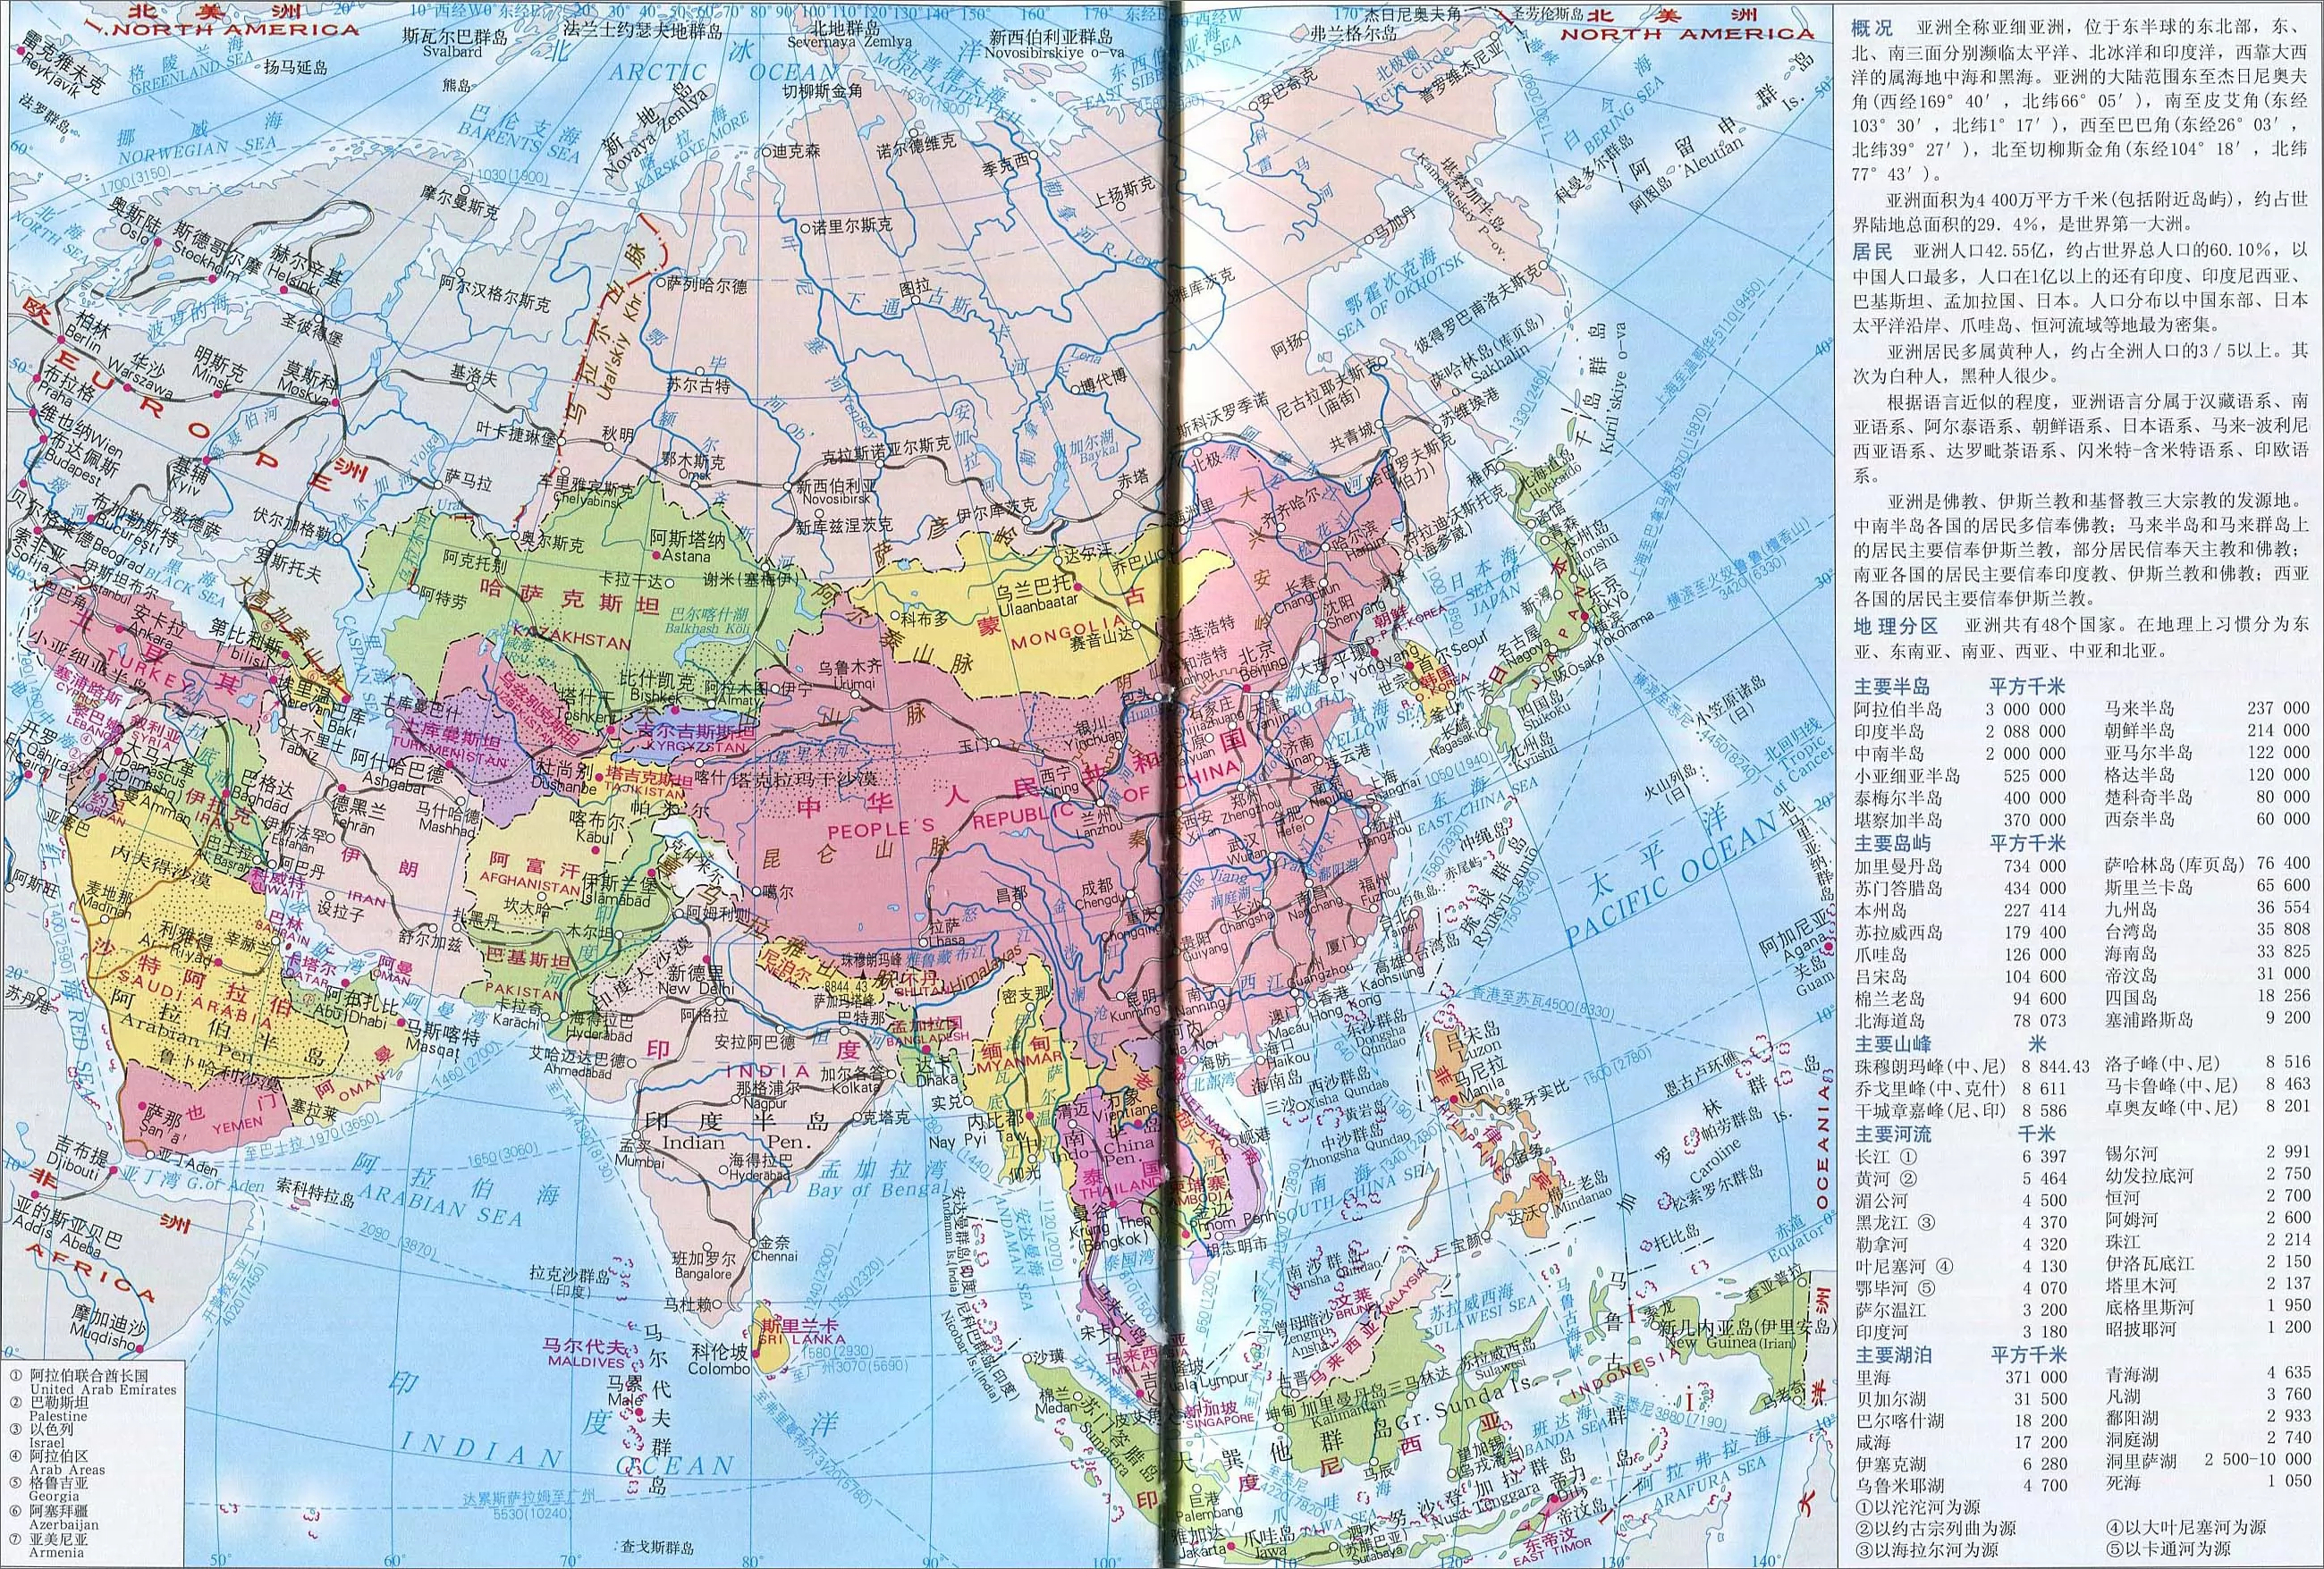 亚洲地图 免费图片 - Public Domain Pictures